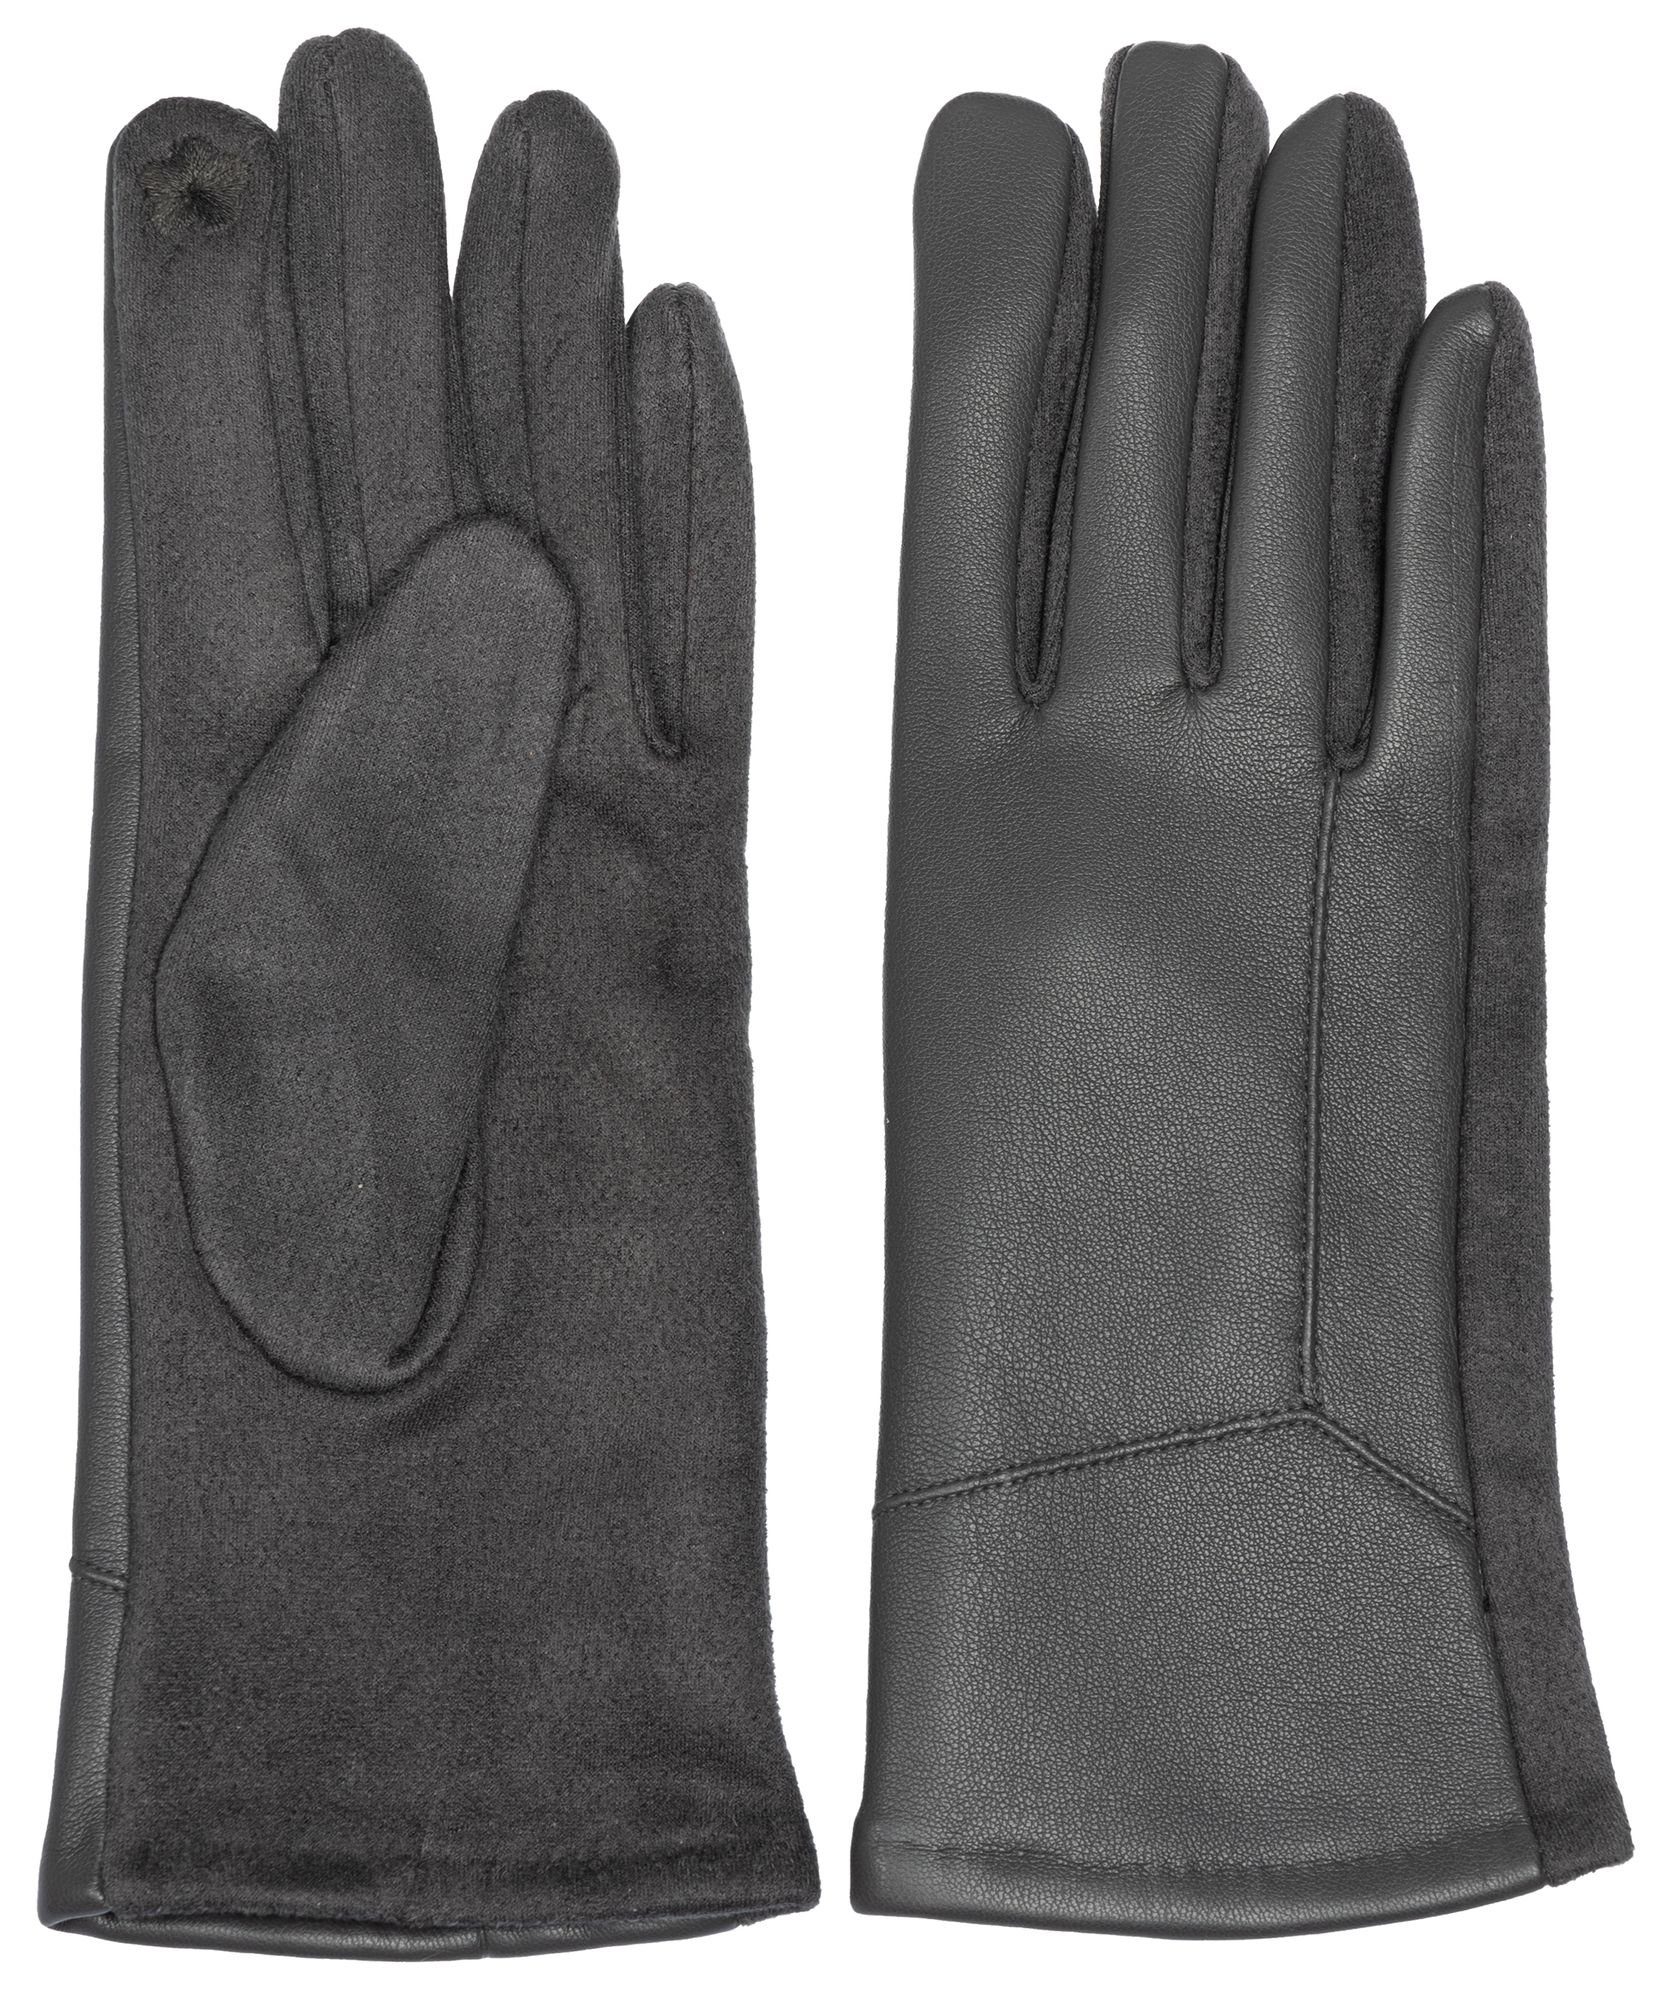 Caspar Strickhandschuhe GLV015 klassisch elegante uni Damen Handschuhe dunkelgrau